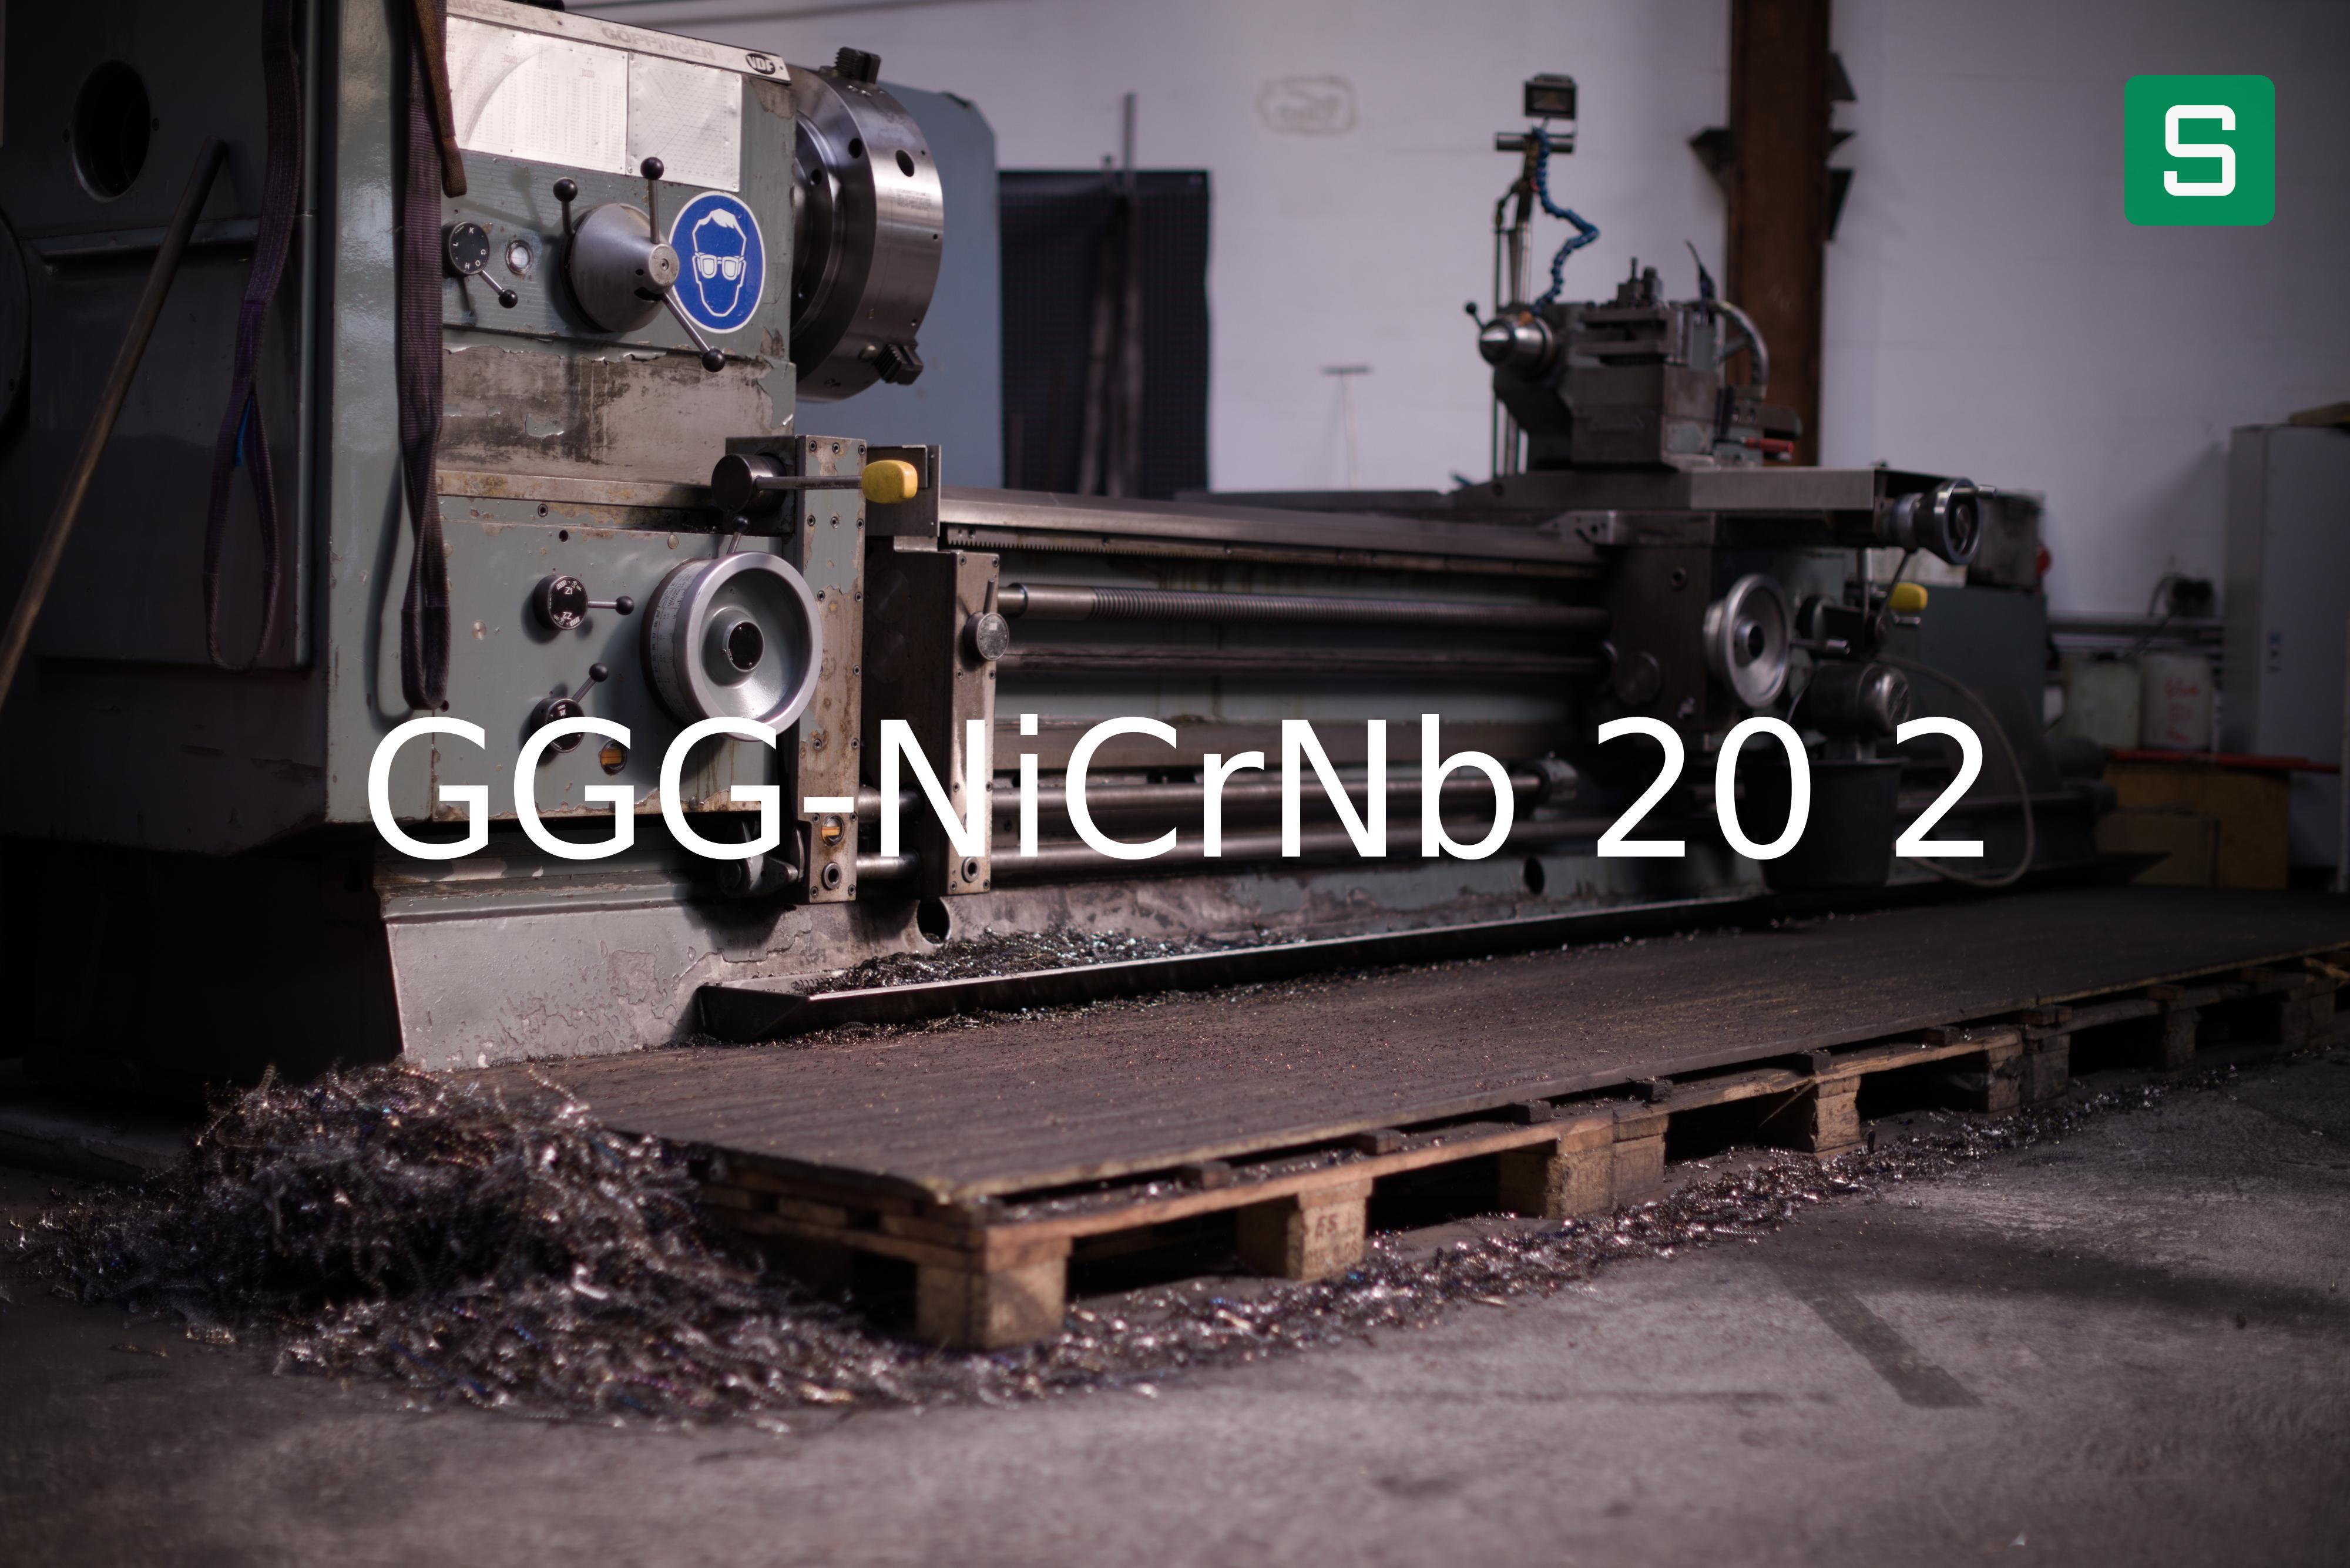 Steel Material: GGG-NiCrNb 20 2